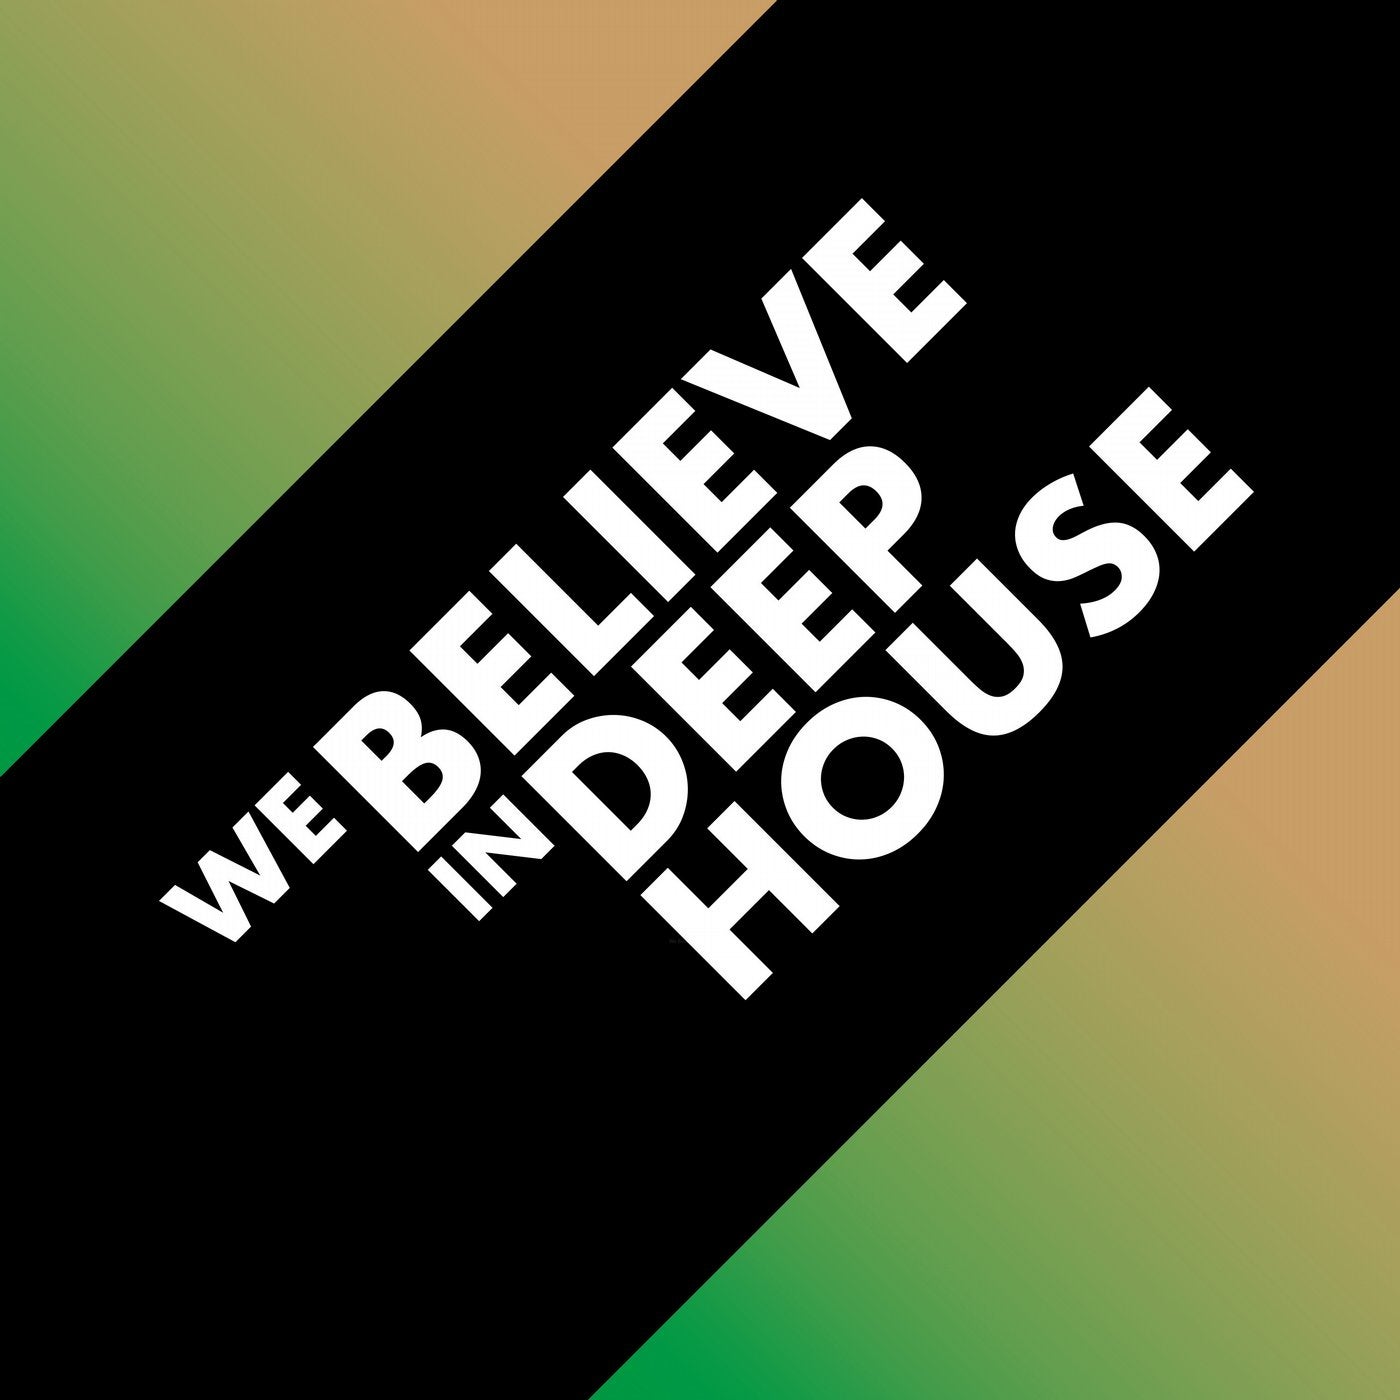 We Believe in Deep House